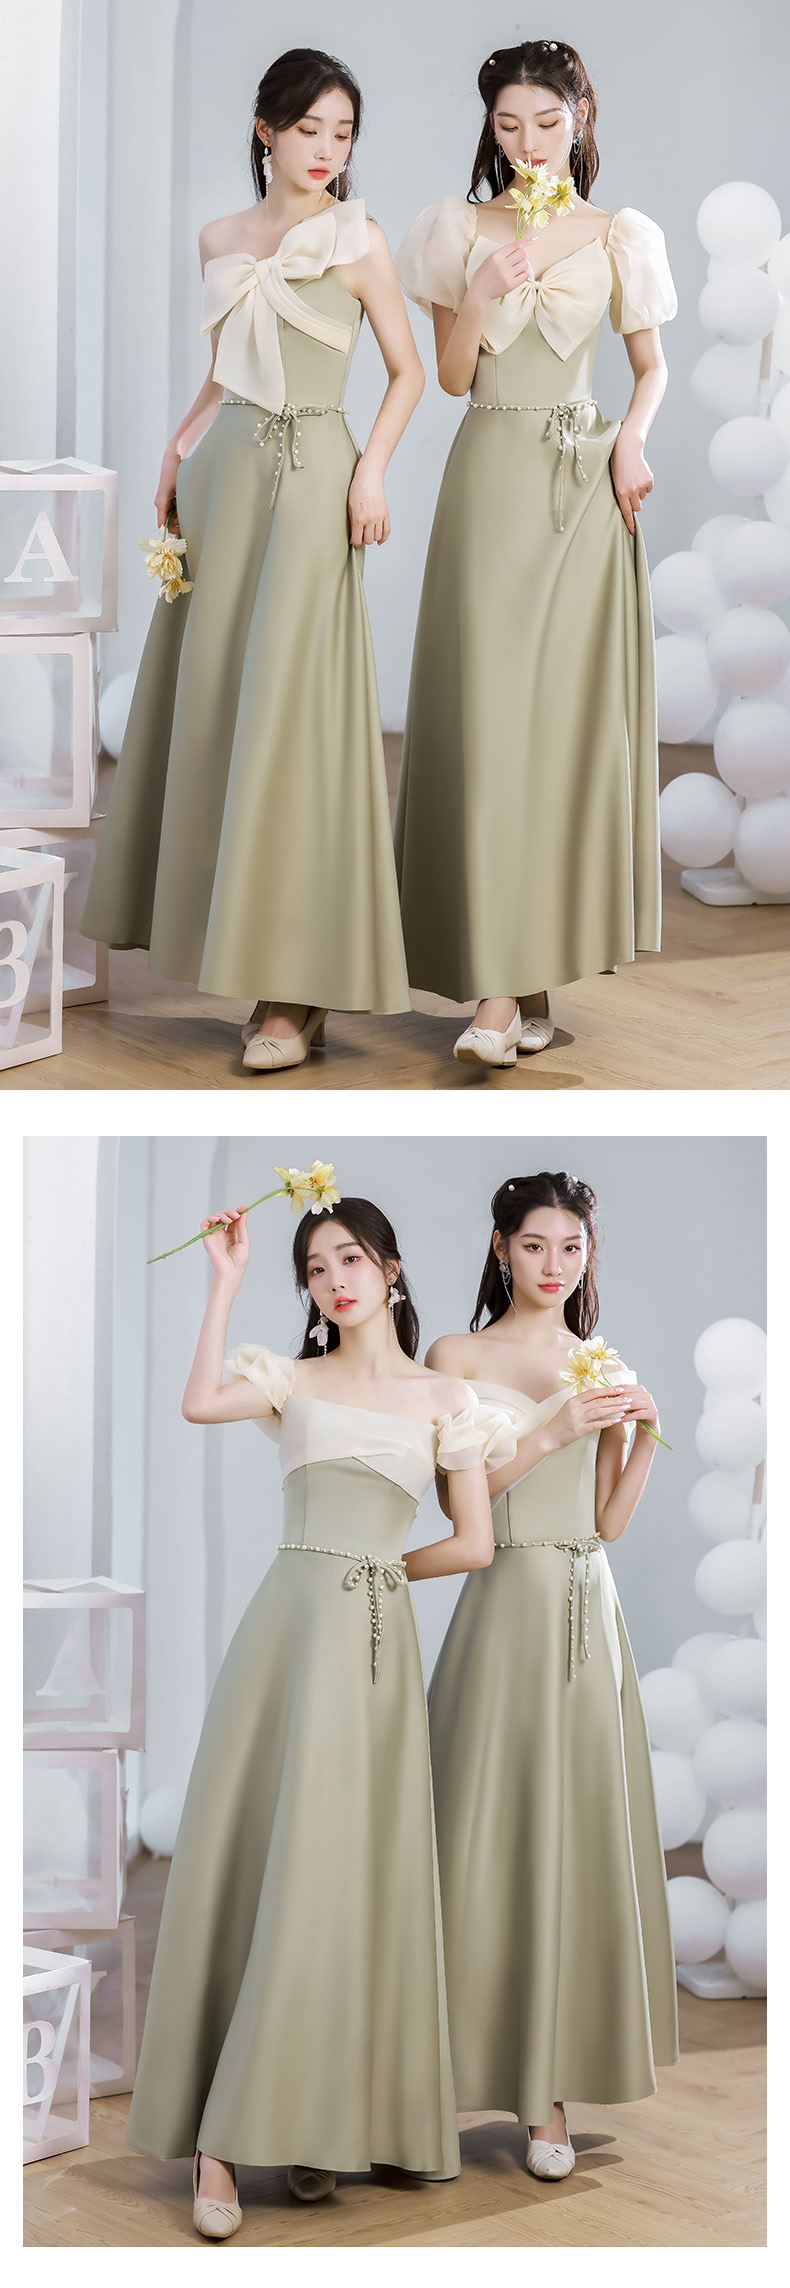 Chic-Boho-Wedding-Green-Formal-Evening-Gown-Bridesmaid-Dress13.jpg